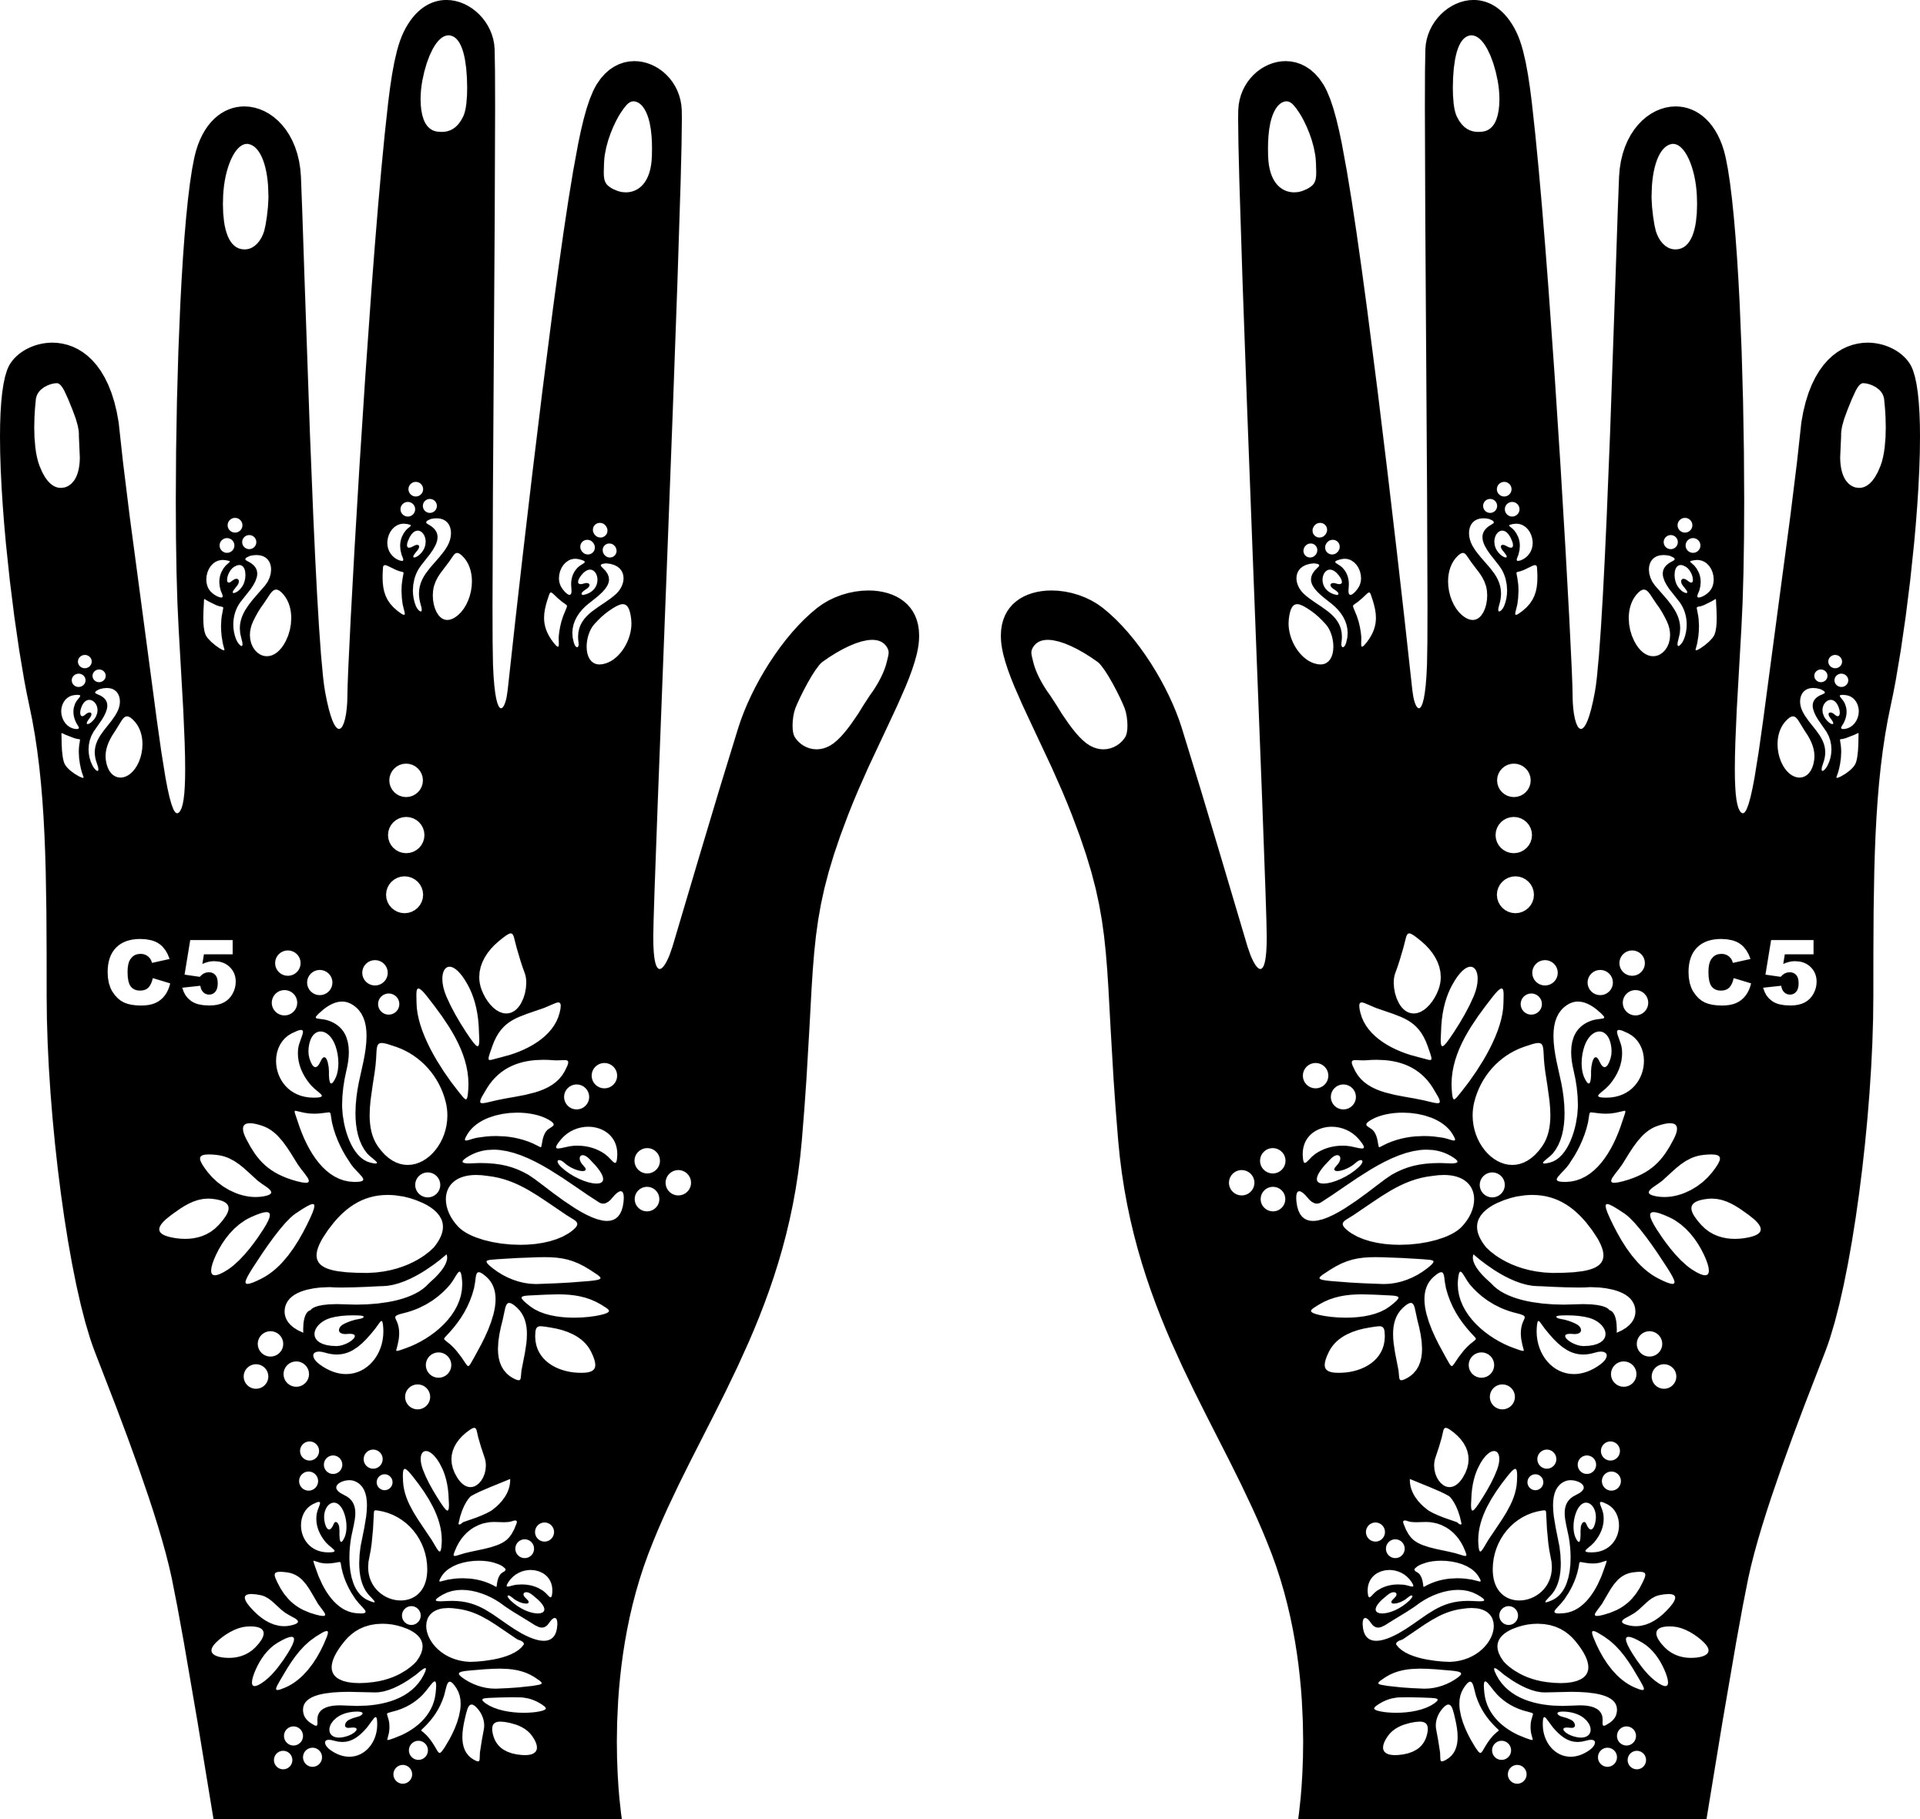 Dark Style Hand Tattoo Sticker Palm Tattoo Template Hand Simulation Temporary Sticker Beautiful Original Hand Tattoo